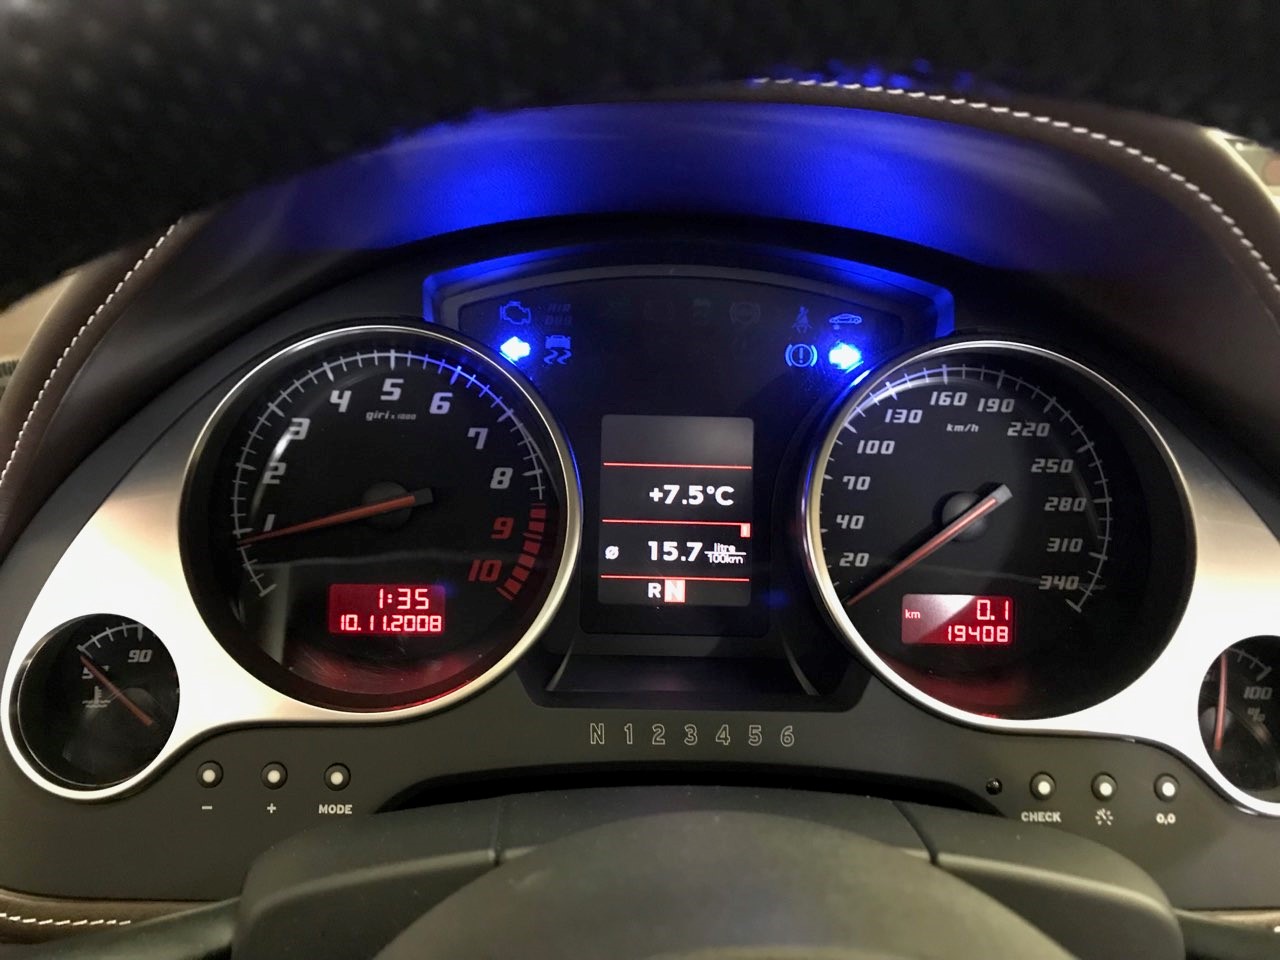 Custom K40 Police Radar Detector Alert LED's flashing Installed on 2010 Lamborghini Gallardo in Surrey, BC